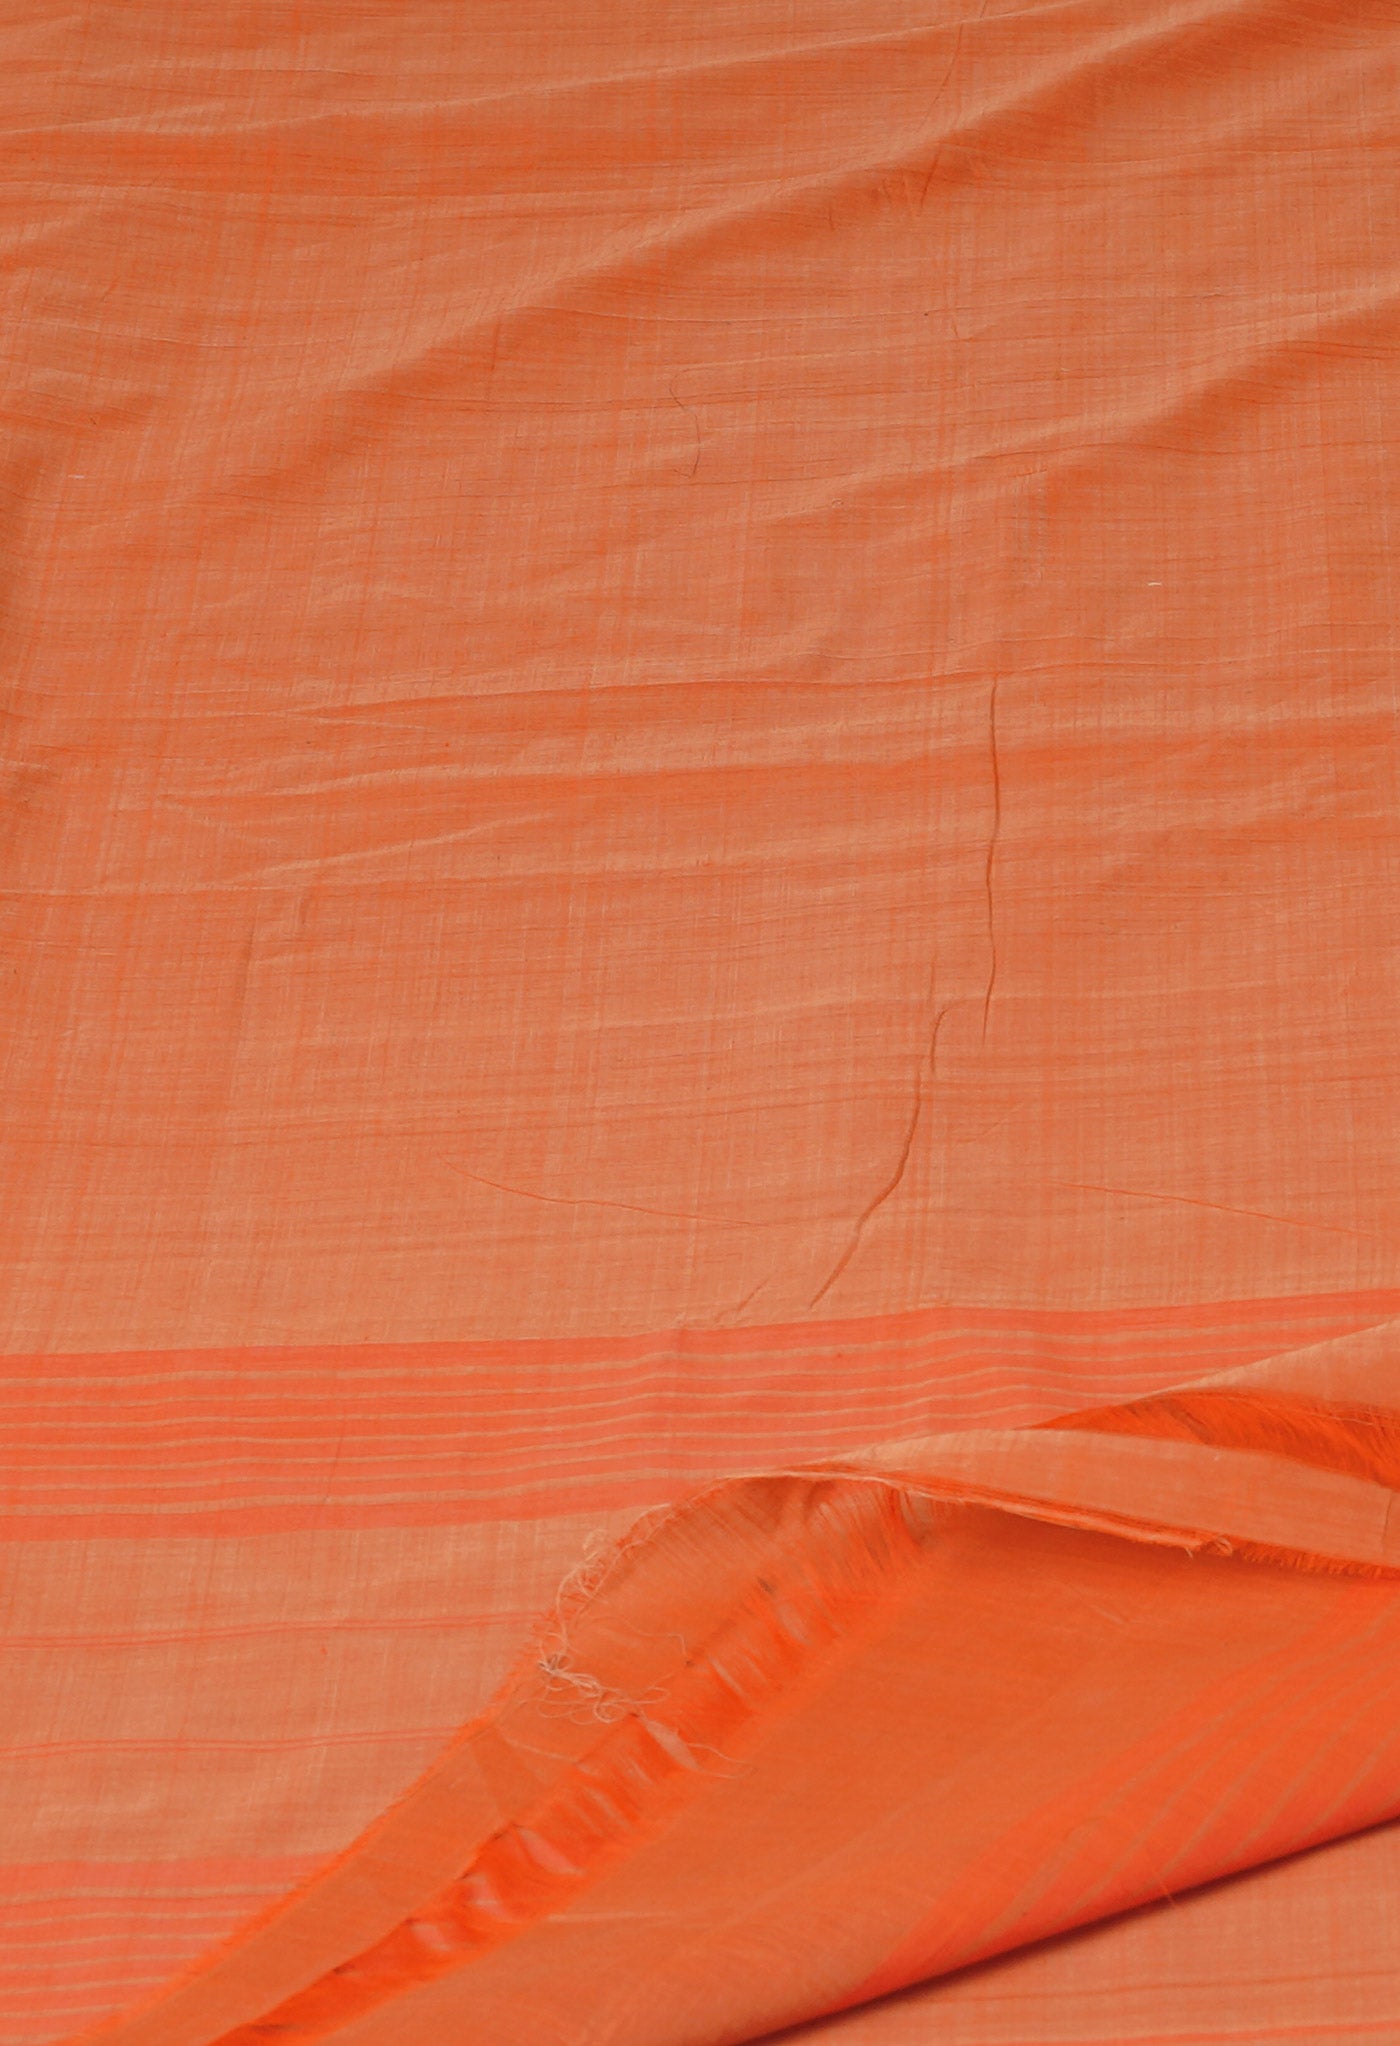 Orange-Cream Pure Andhra Handloom Cotton Saree